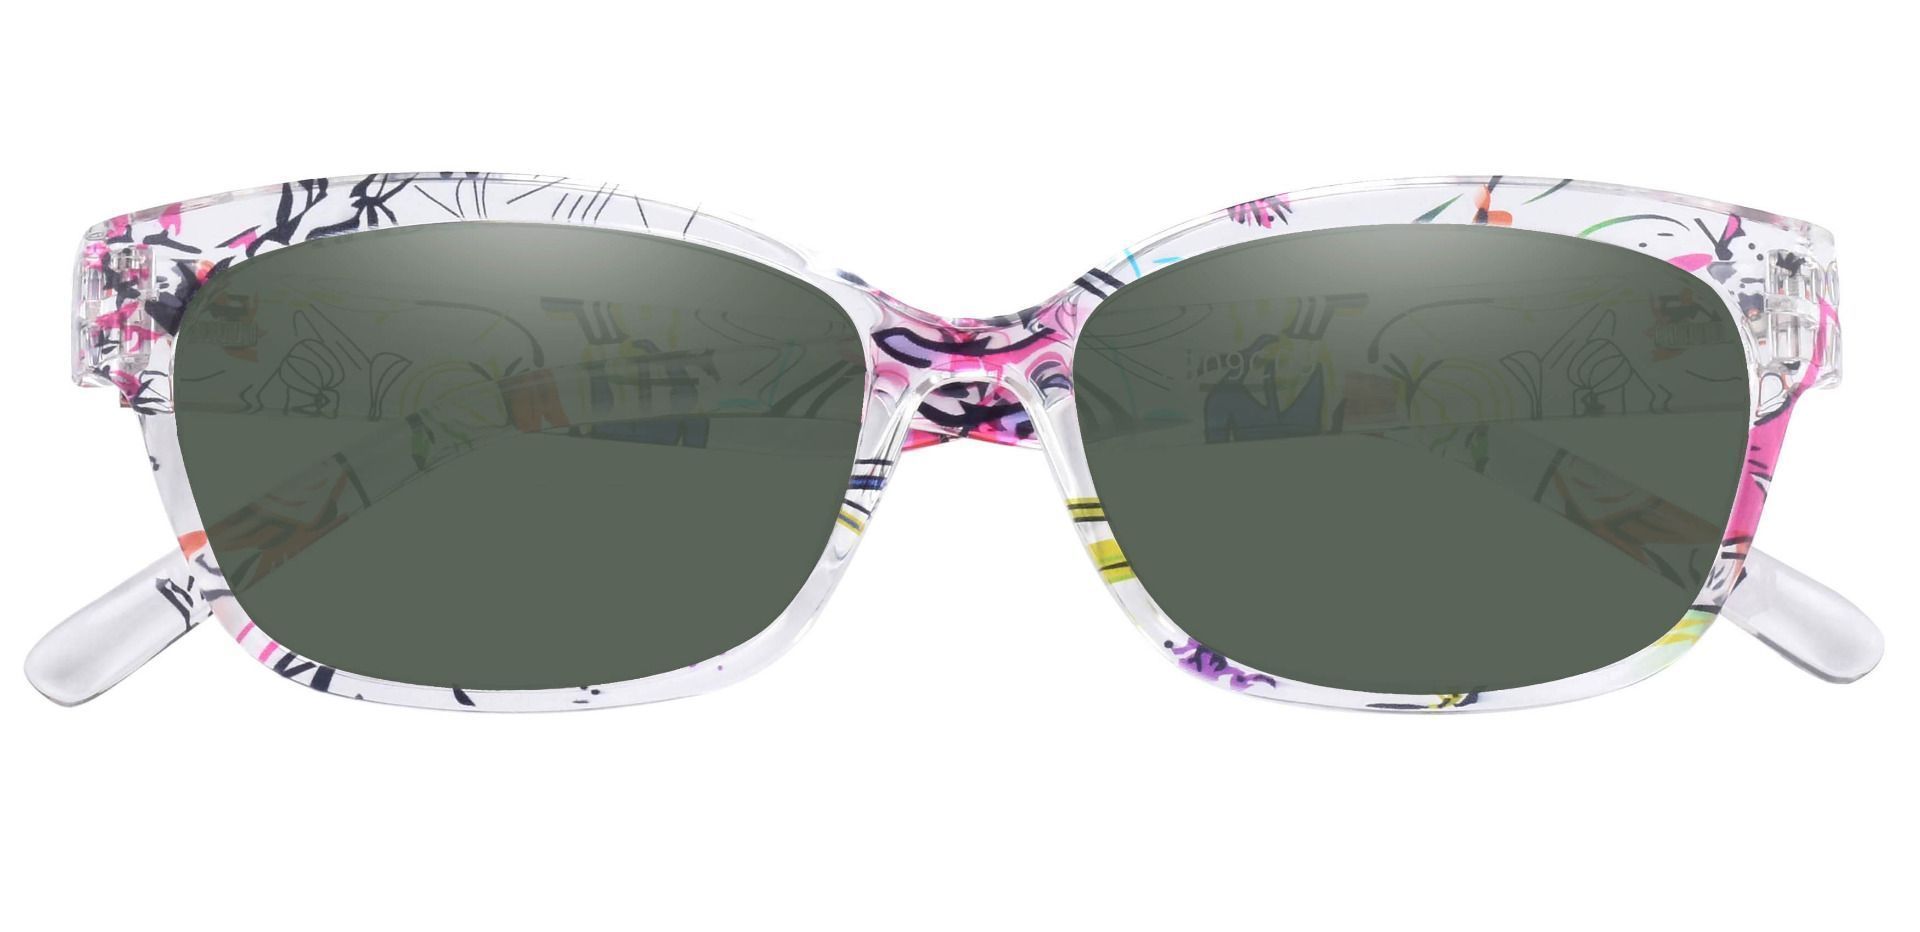 Adele Cat-Eye Prescription Sunglasses - Clear Frame With Green Lenses